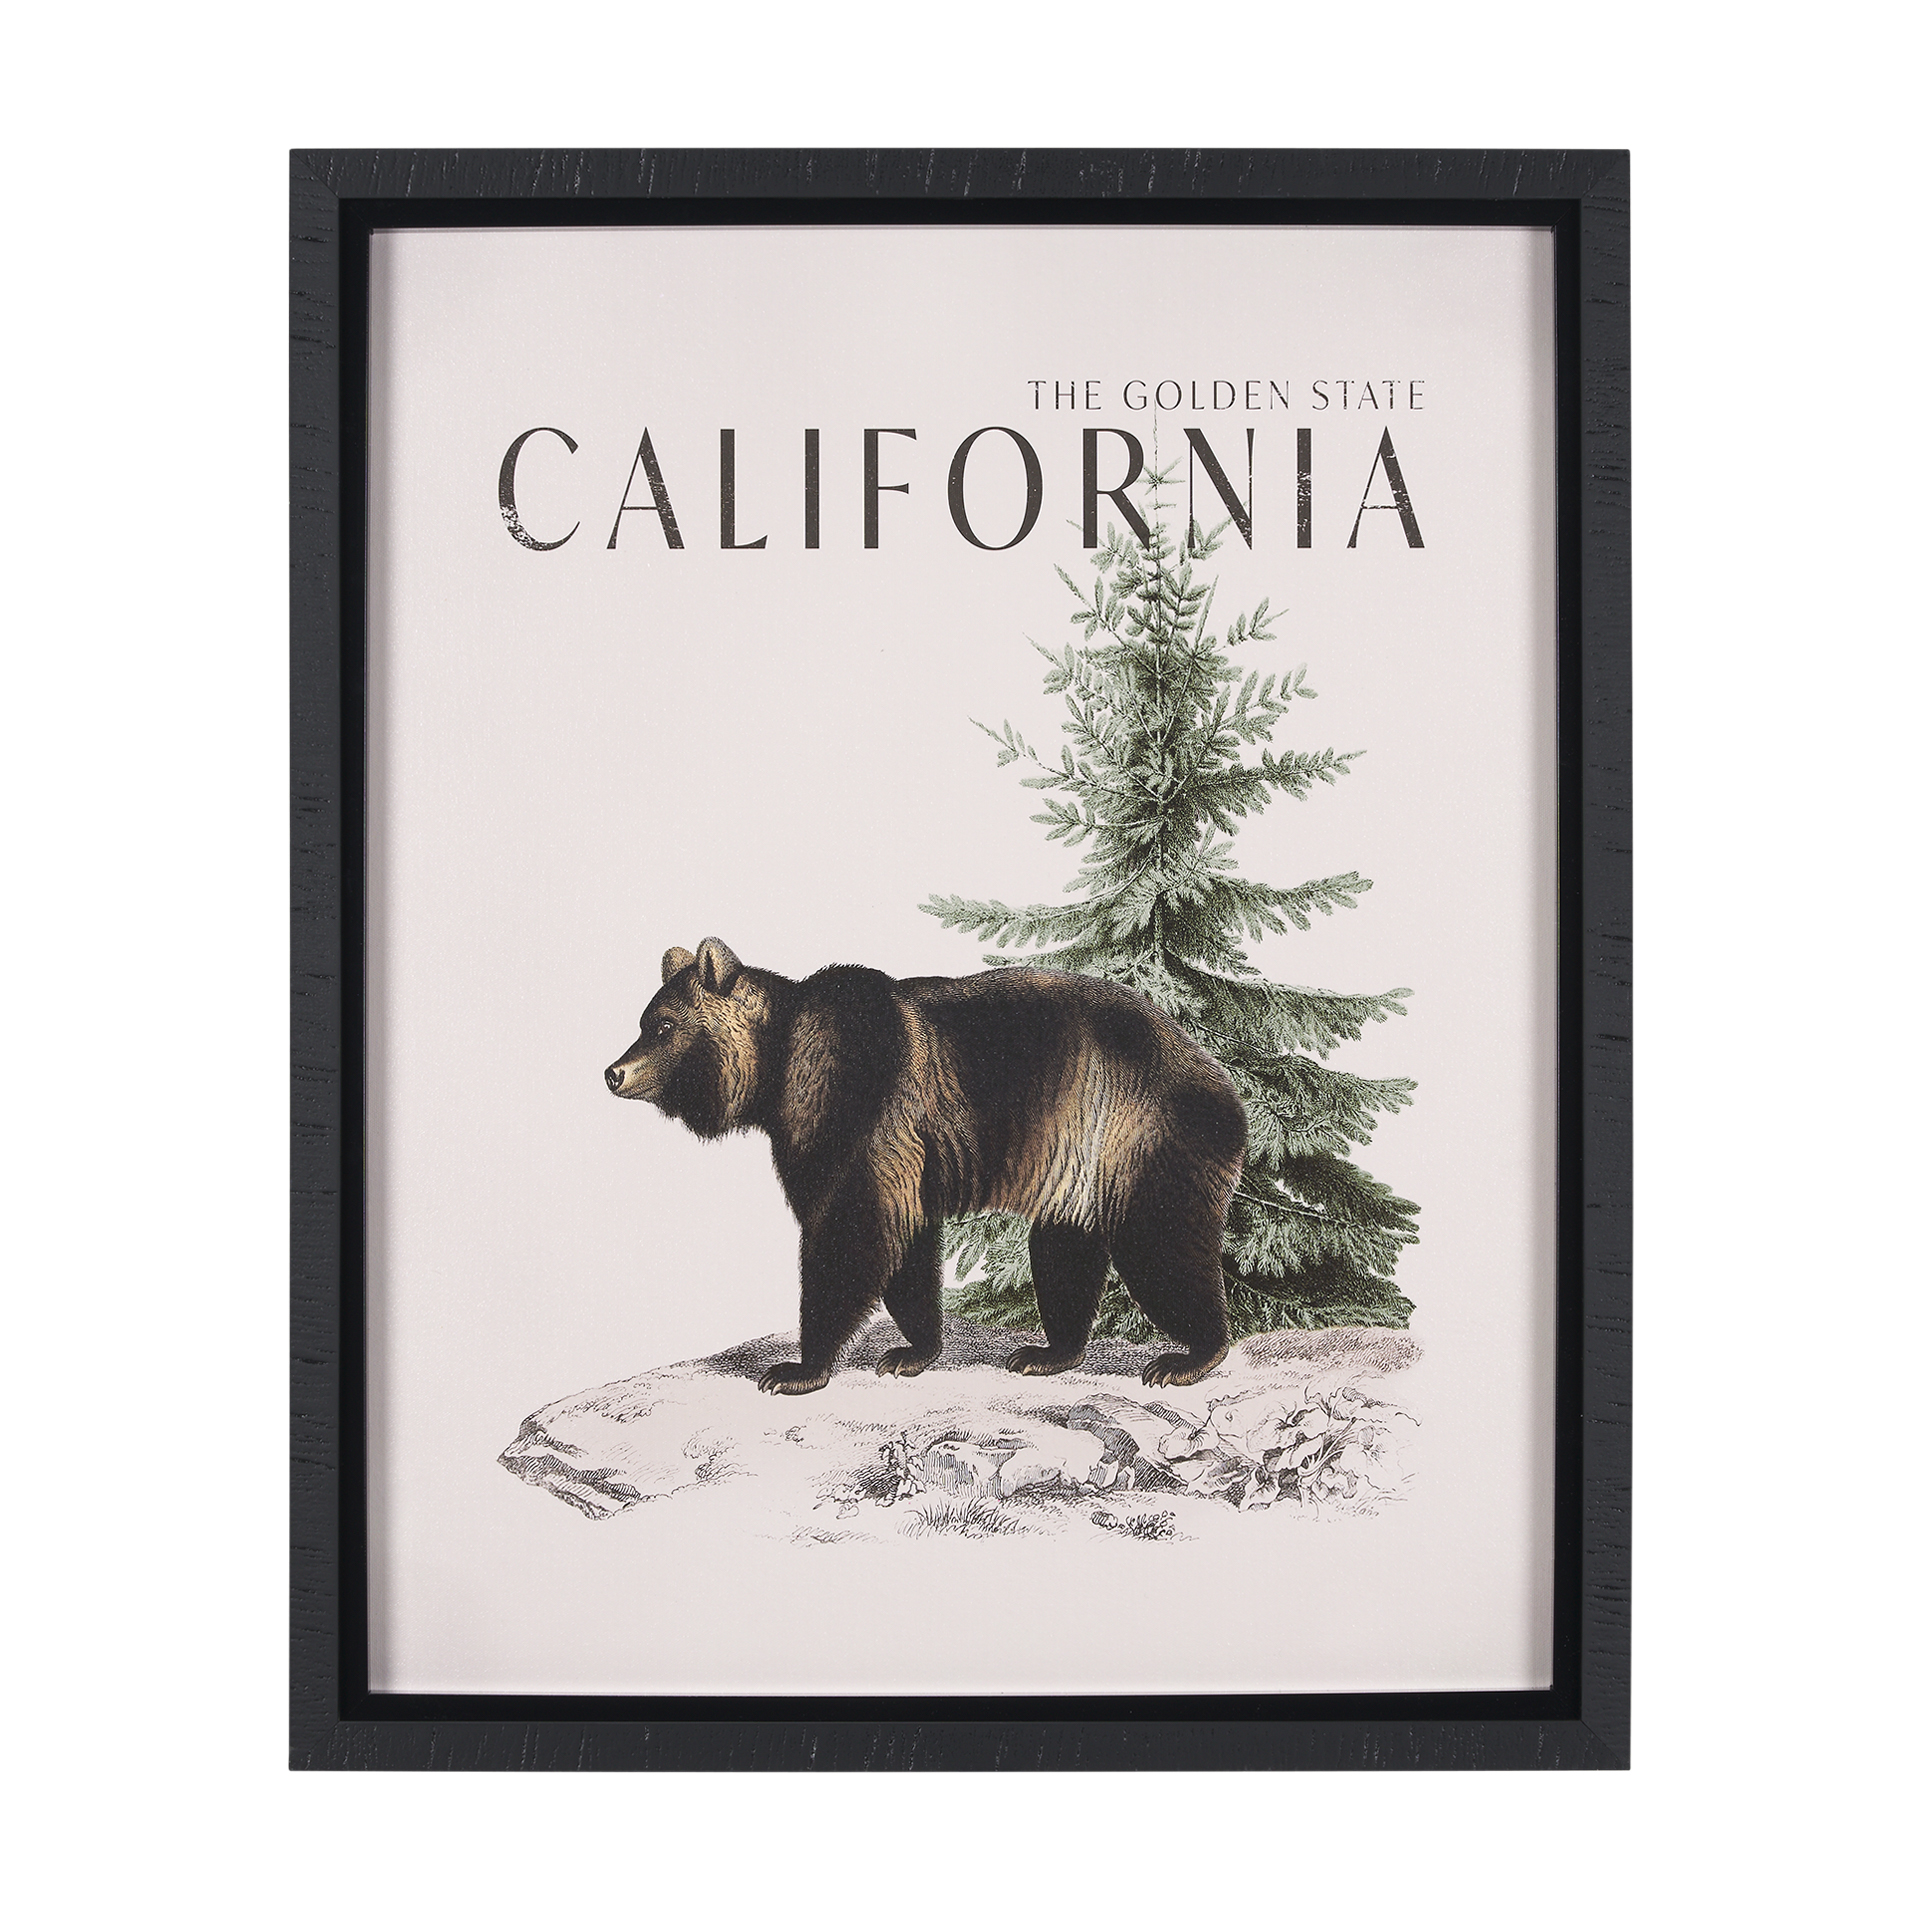 Travel Guide - California (26 x 32)